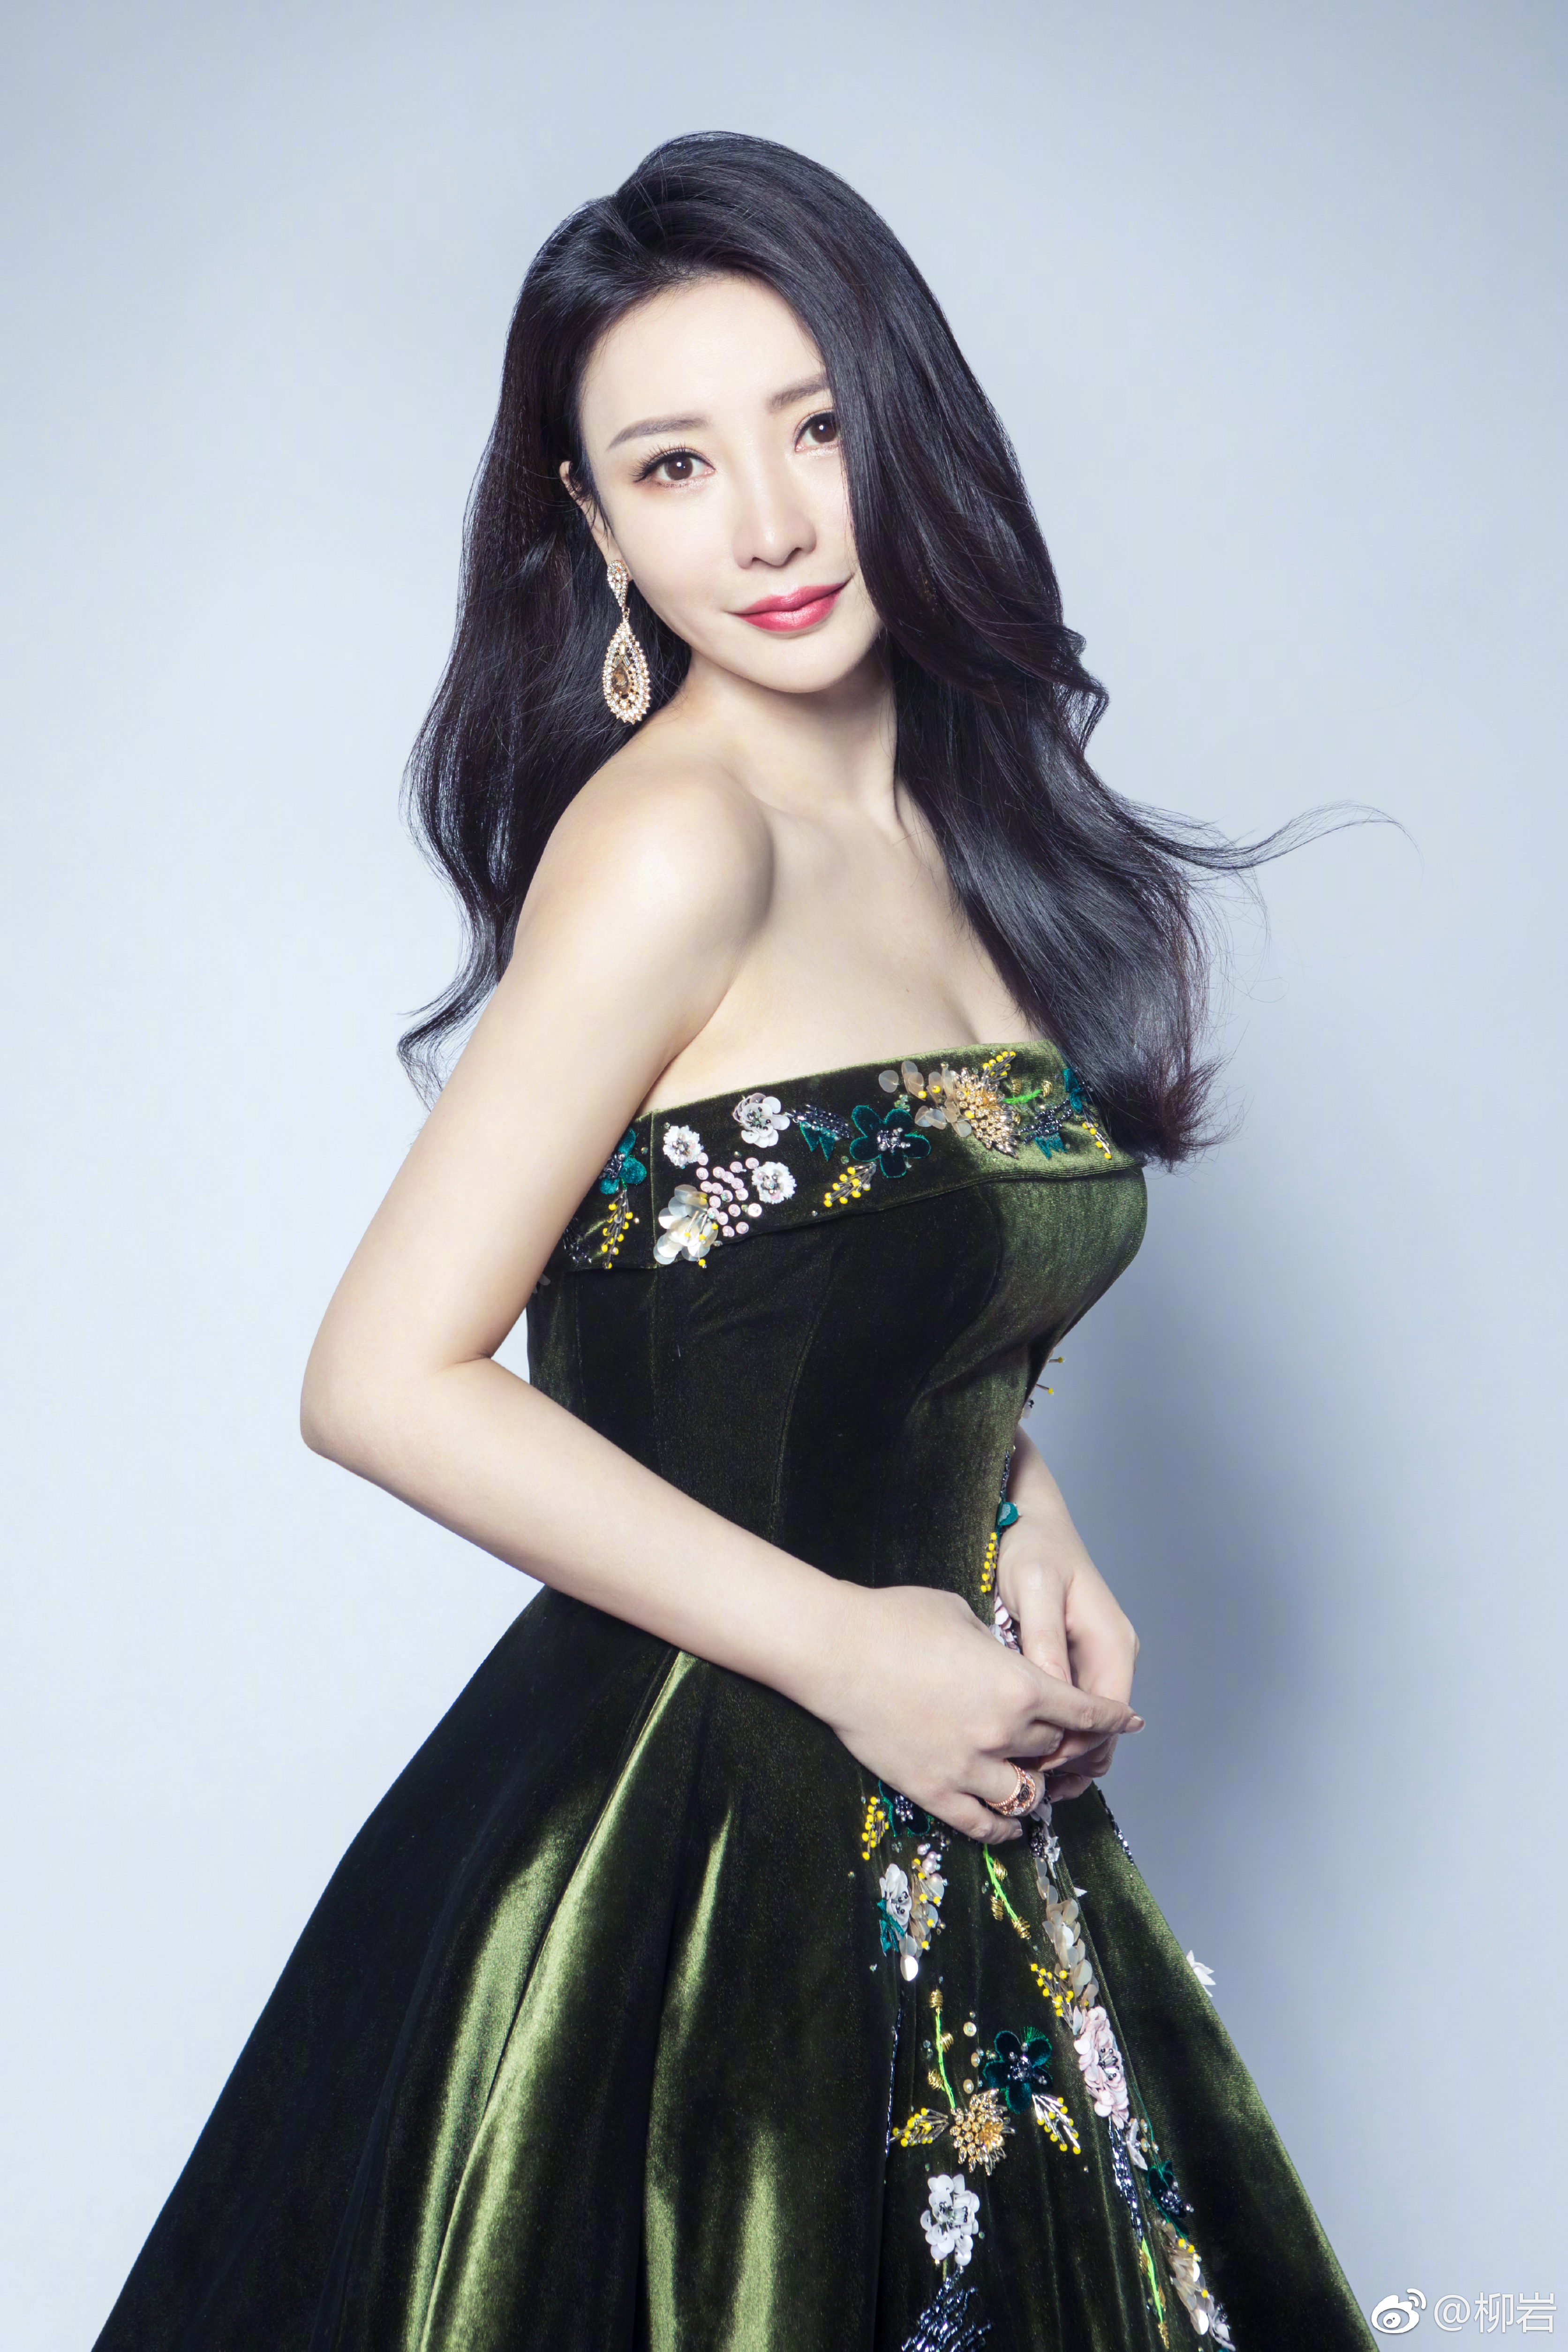 Liuyan Chinese Green Dress Looking At Viewer Black Hair Red Lipstick 3344x5016